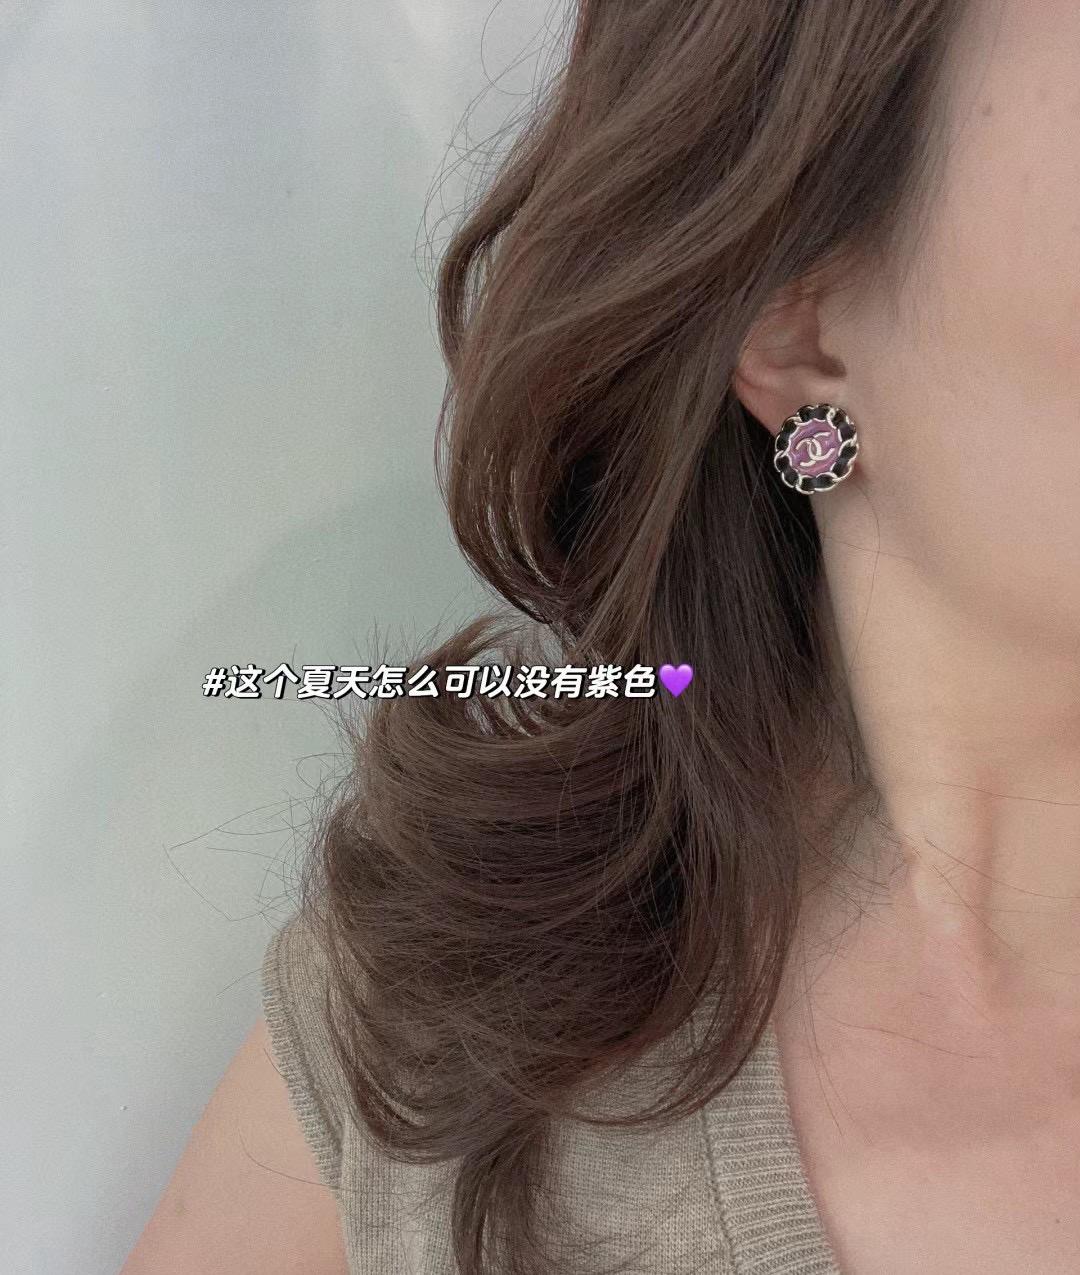 CHANEL 小香 24手工坊系列 皮穿鏈山茶花紫琺瑯耳釘